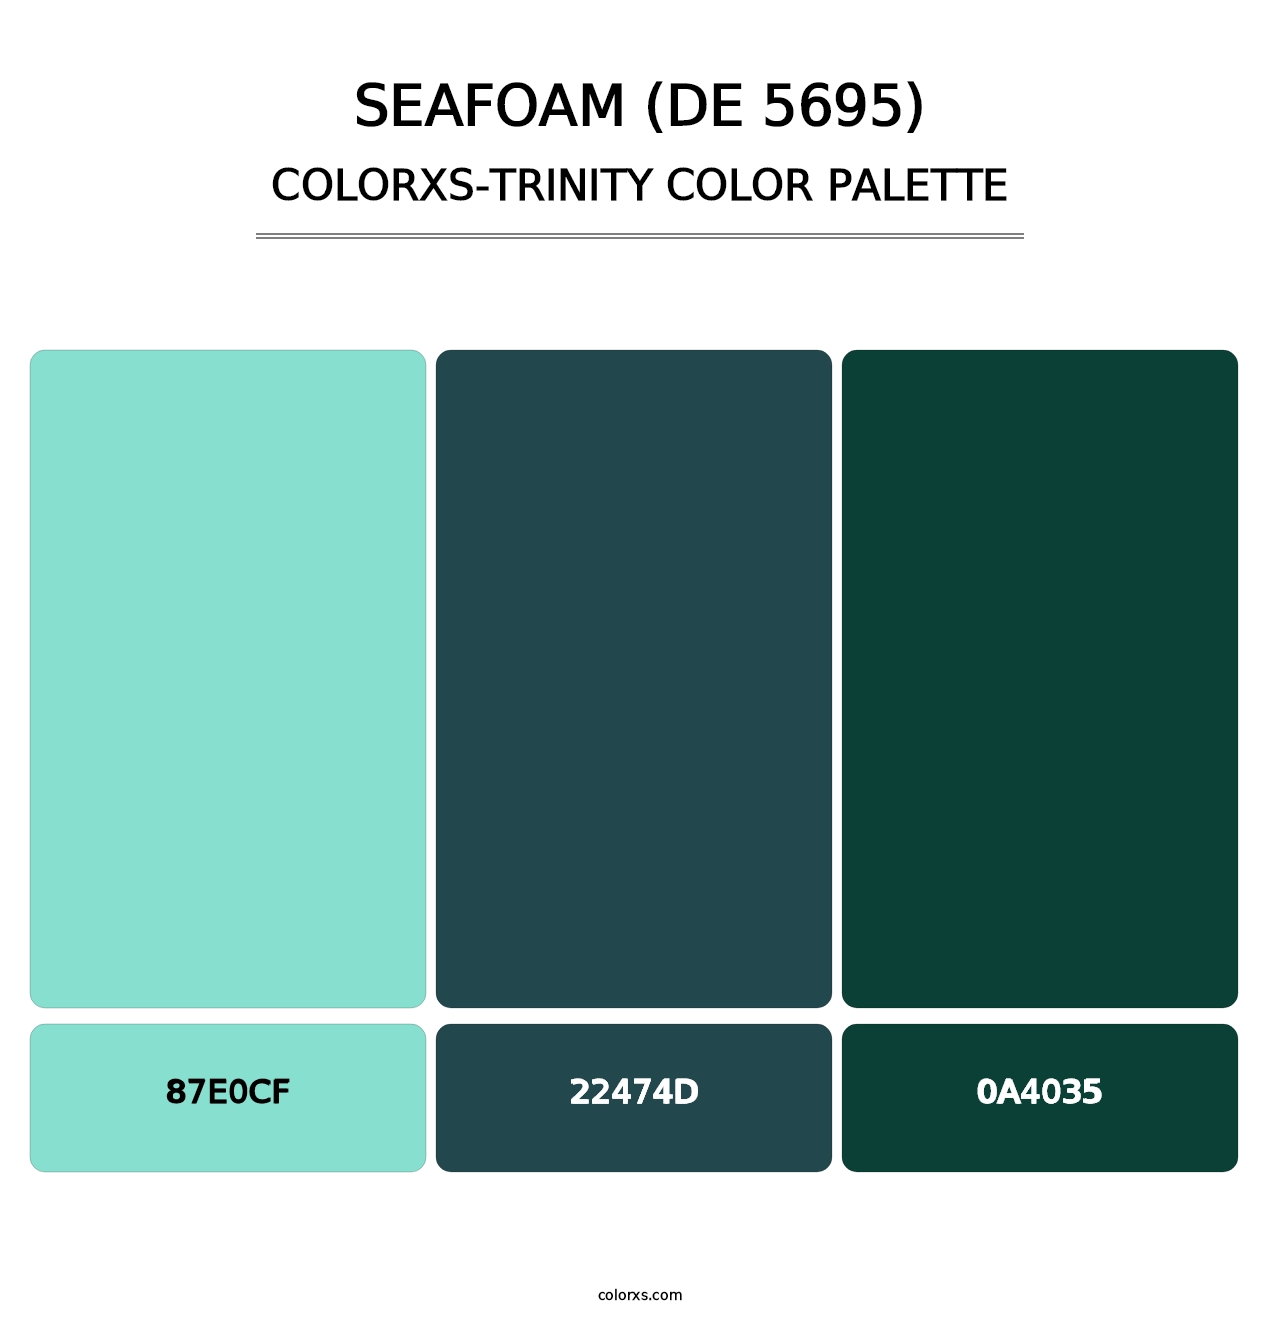 Seafoam (DE 5695) - Colorxs Trinity Palette